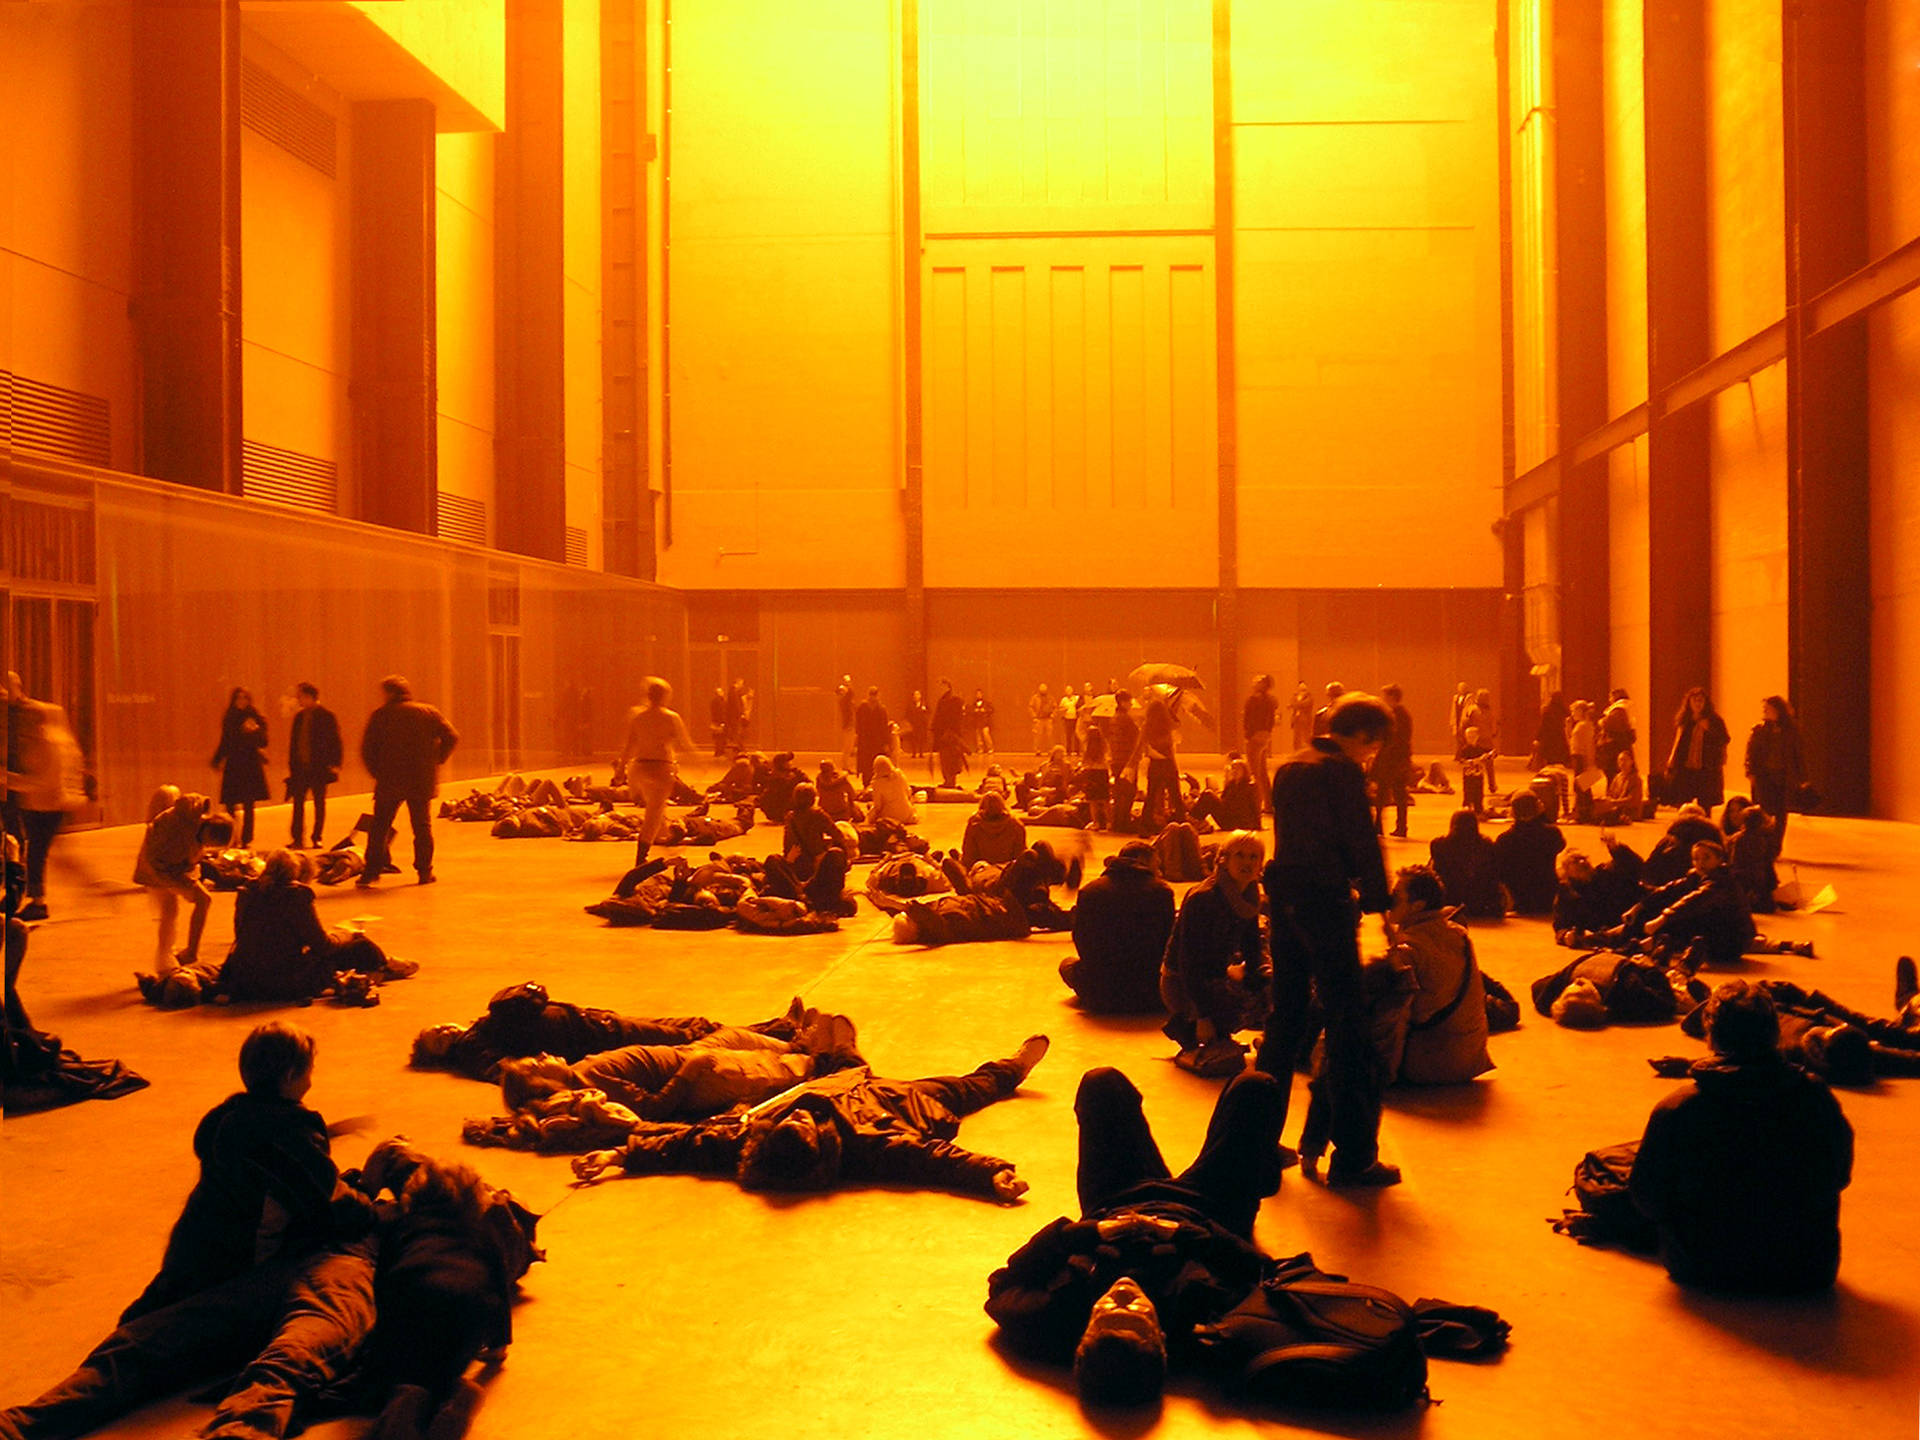 People Inside Turbine Hall Tate Modern Picture